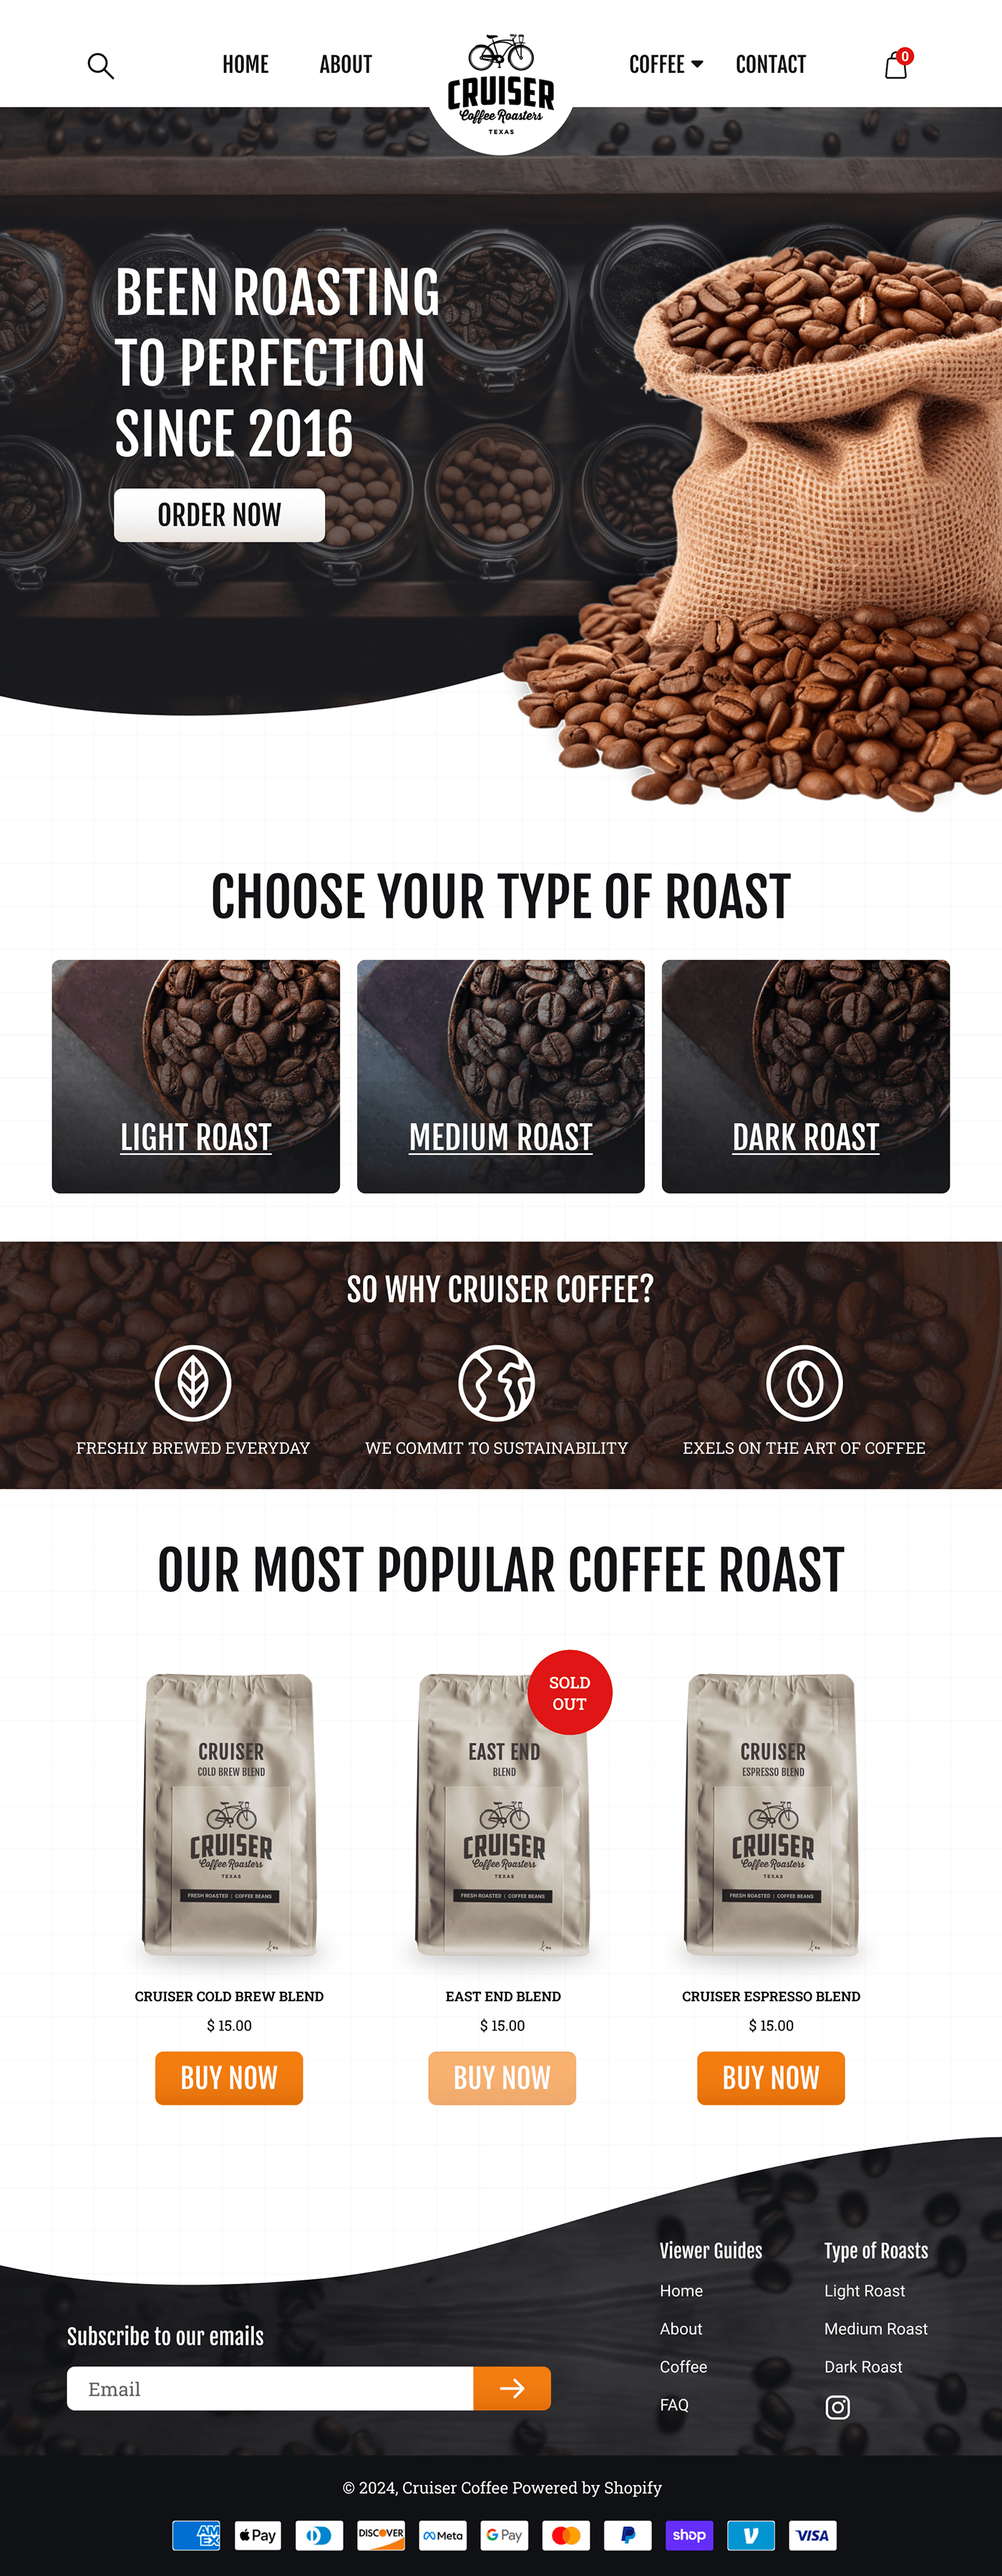 Figma adobe illustrator Adobe Photoshop ecommerce store eCommerce design Ecommerce Coffee coffee beans branding  roasted coffee